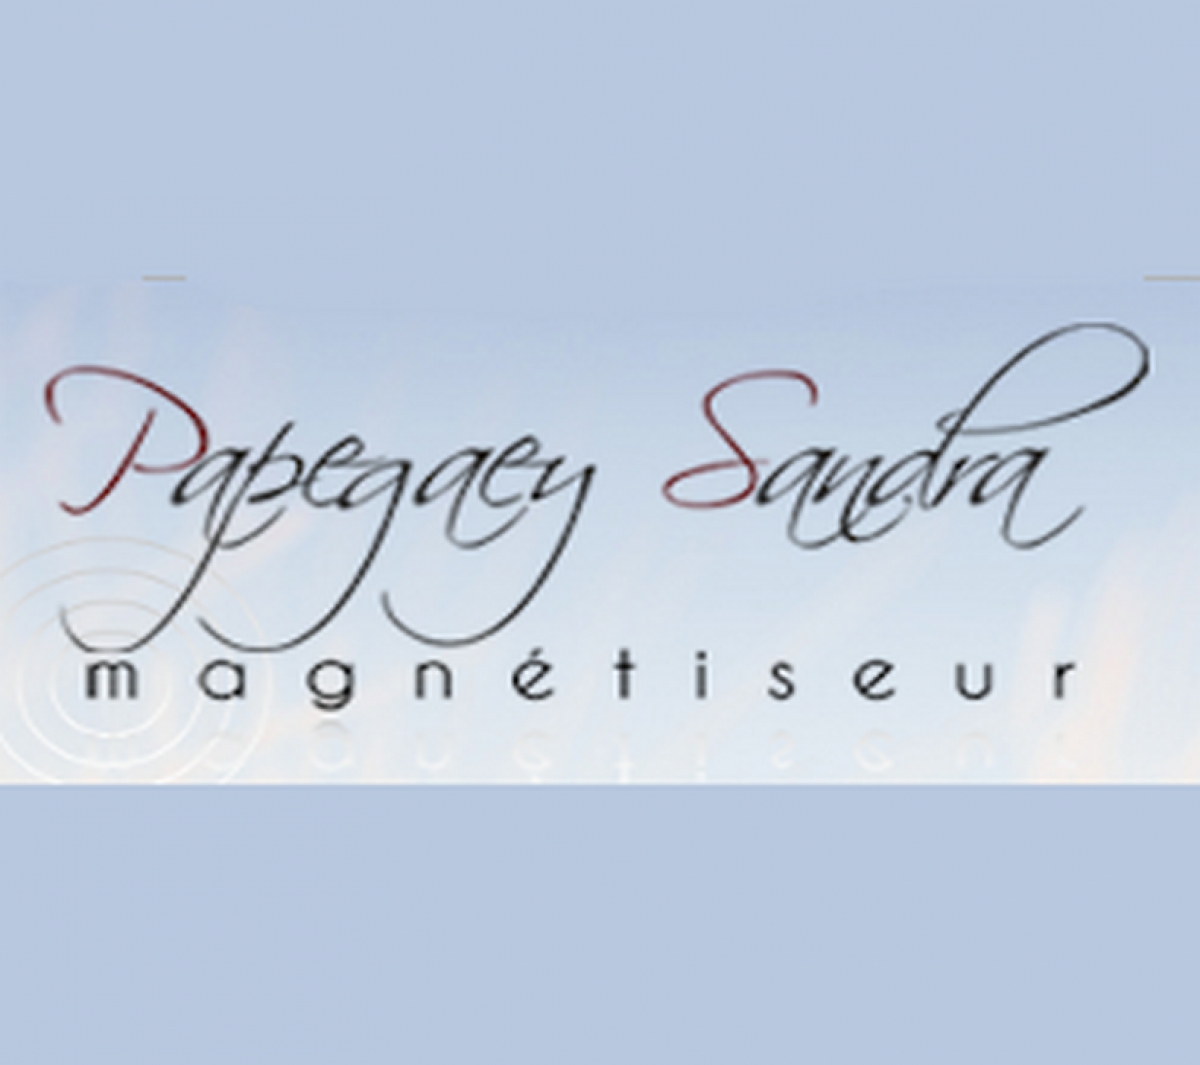 Papegaey Sandra - Magnétiseur